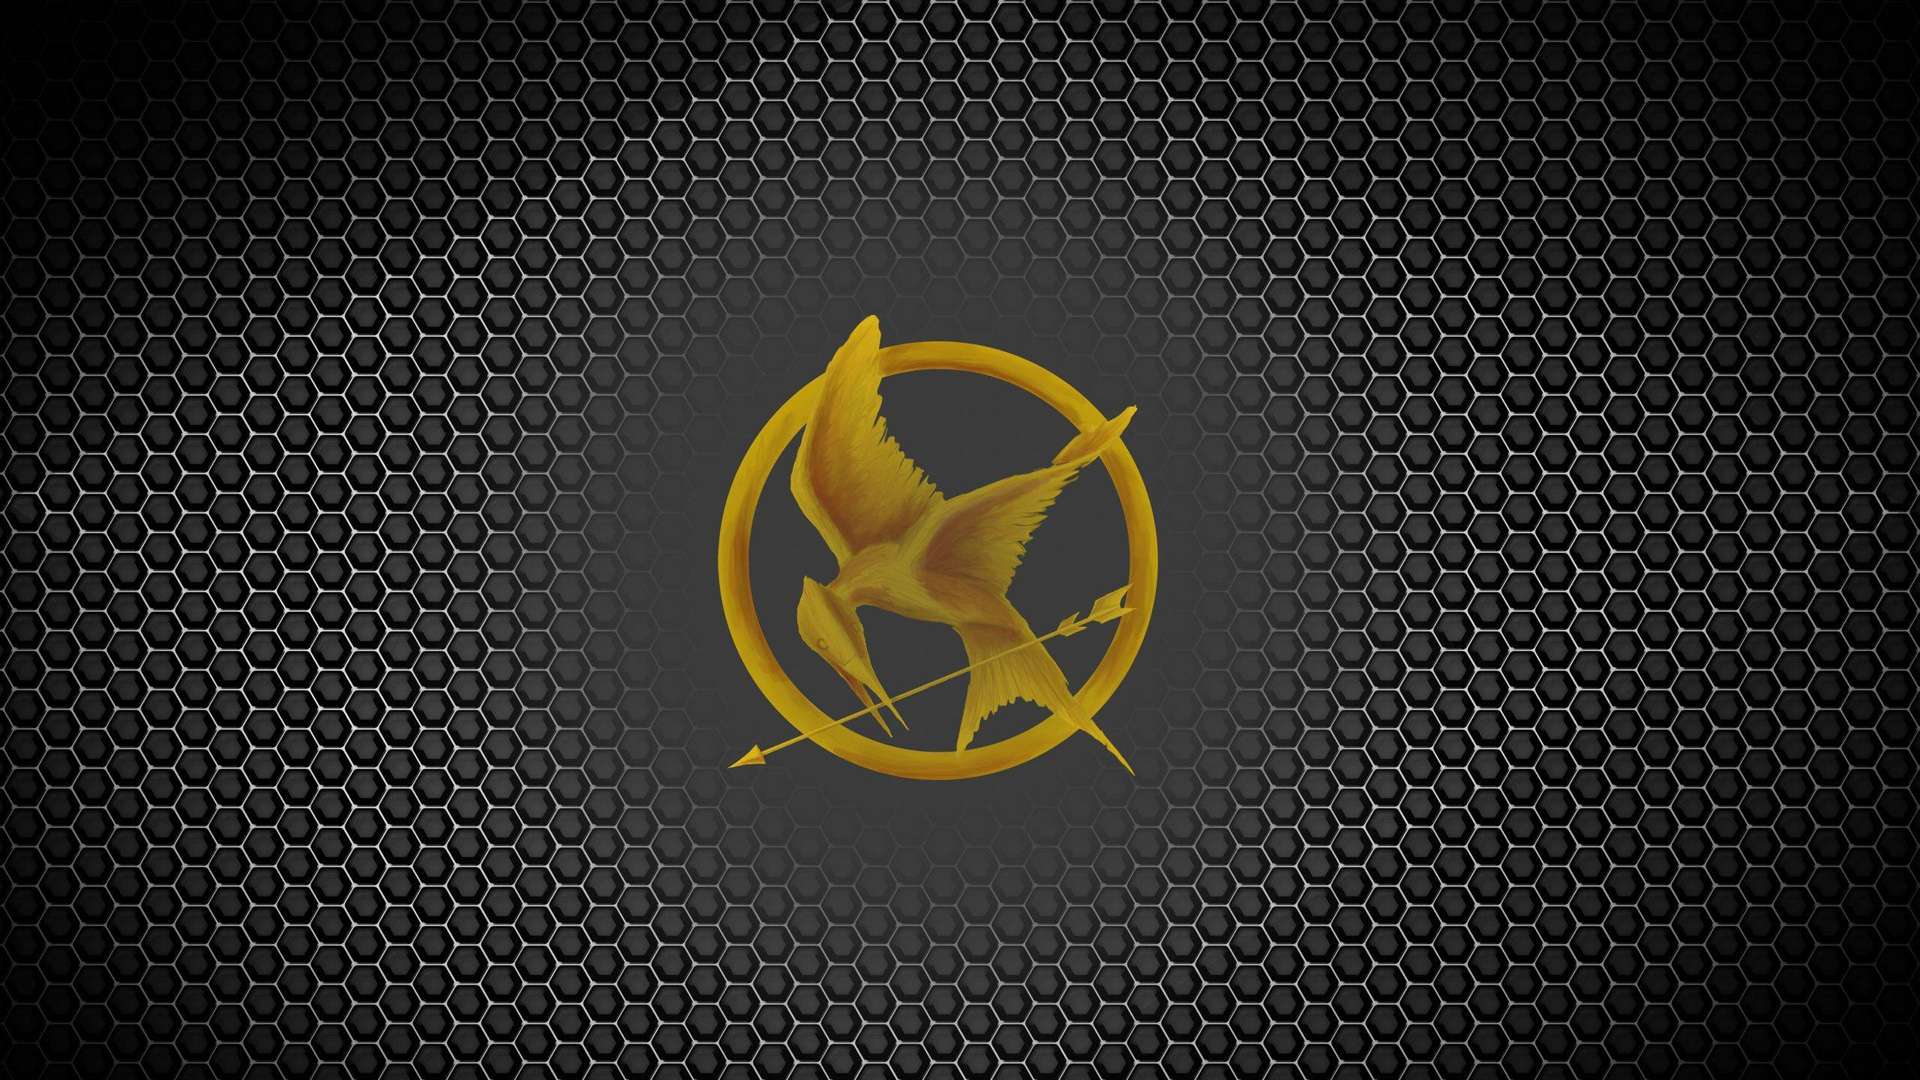 The Hunger Games Logo HD Wallpaper FullHDWpp   Full HD Wallpapers